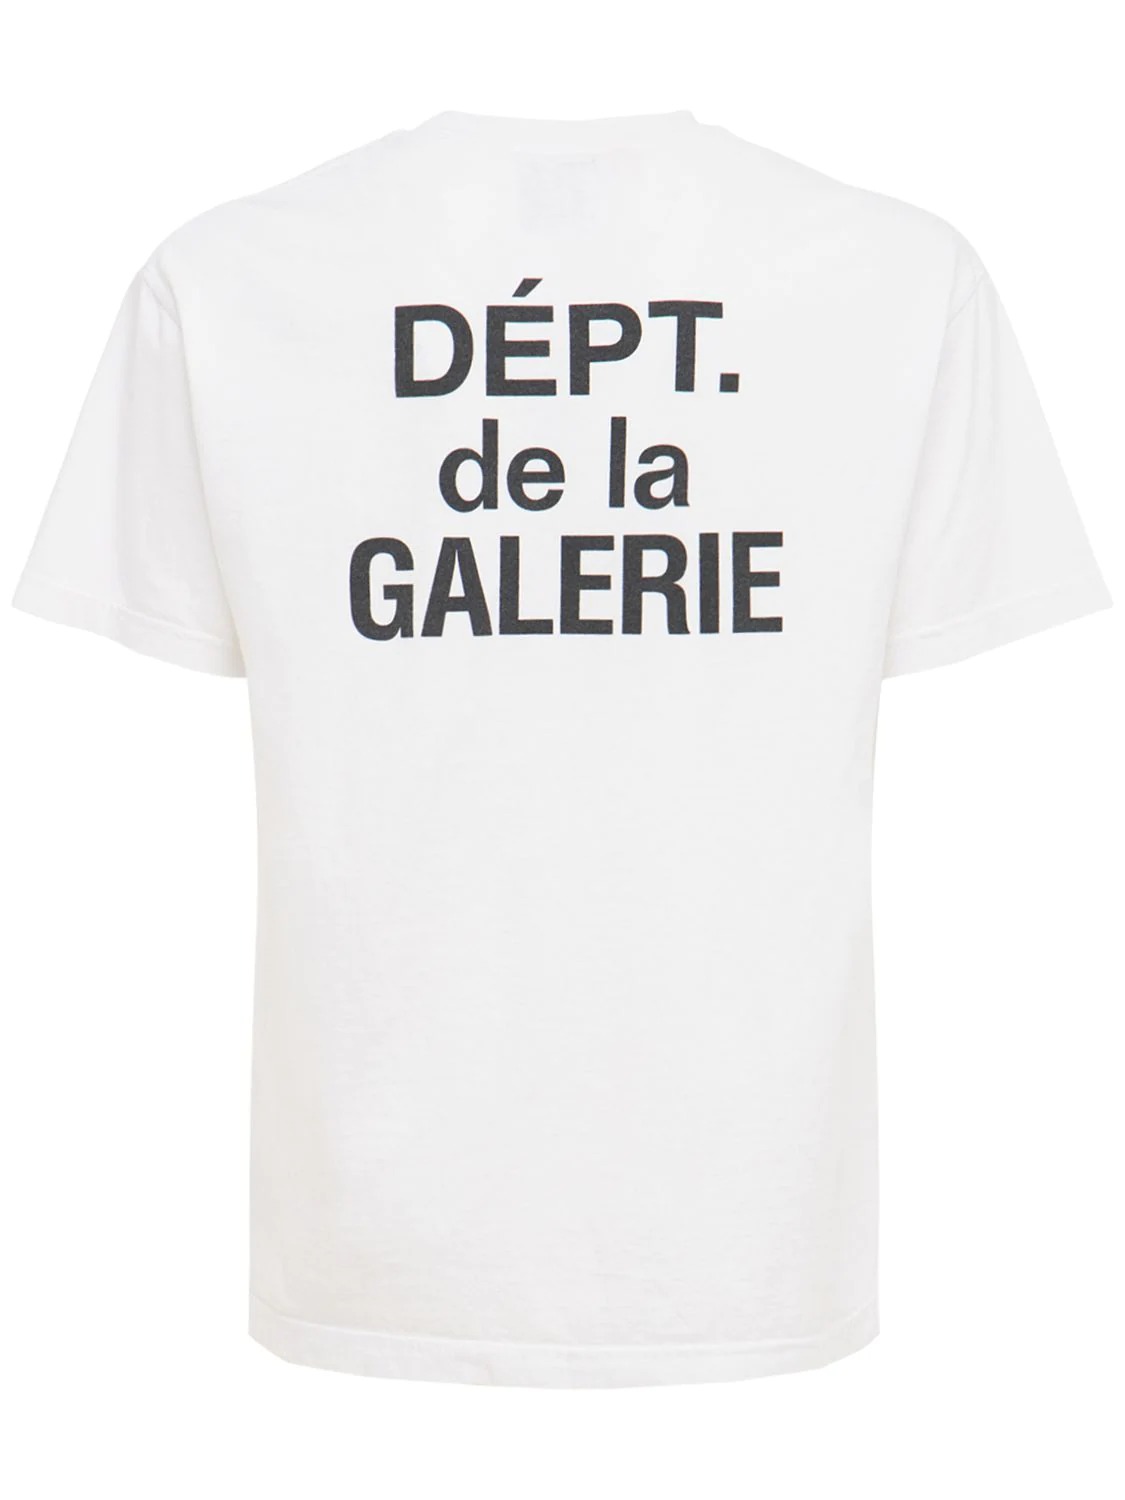 Gallery Dept French logo tee black